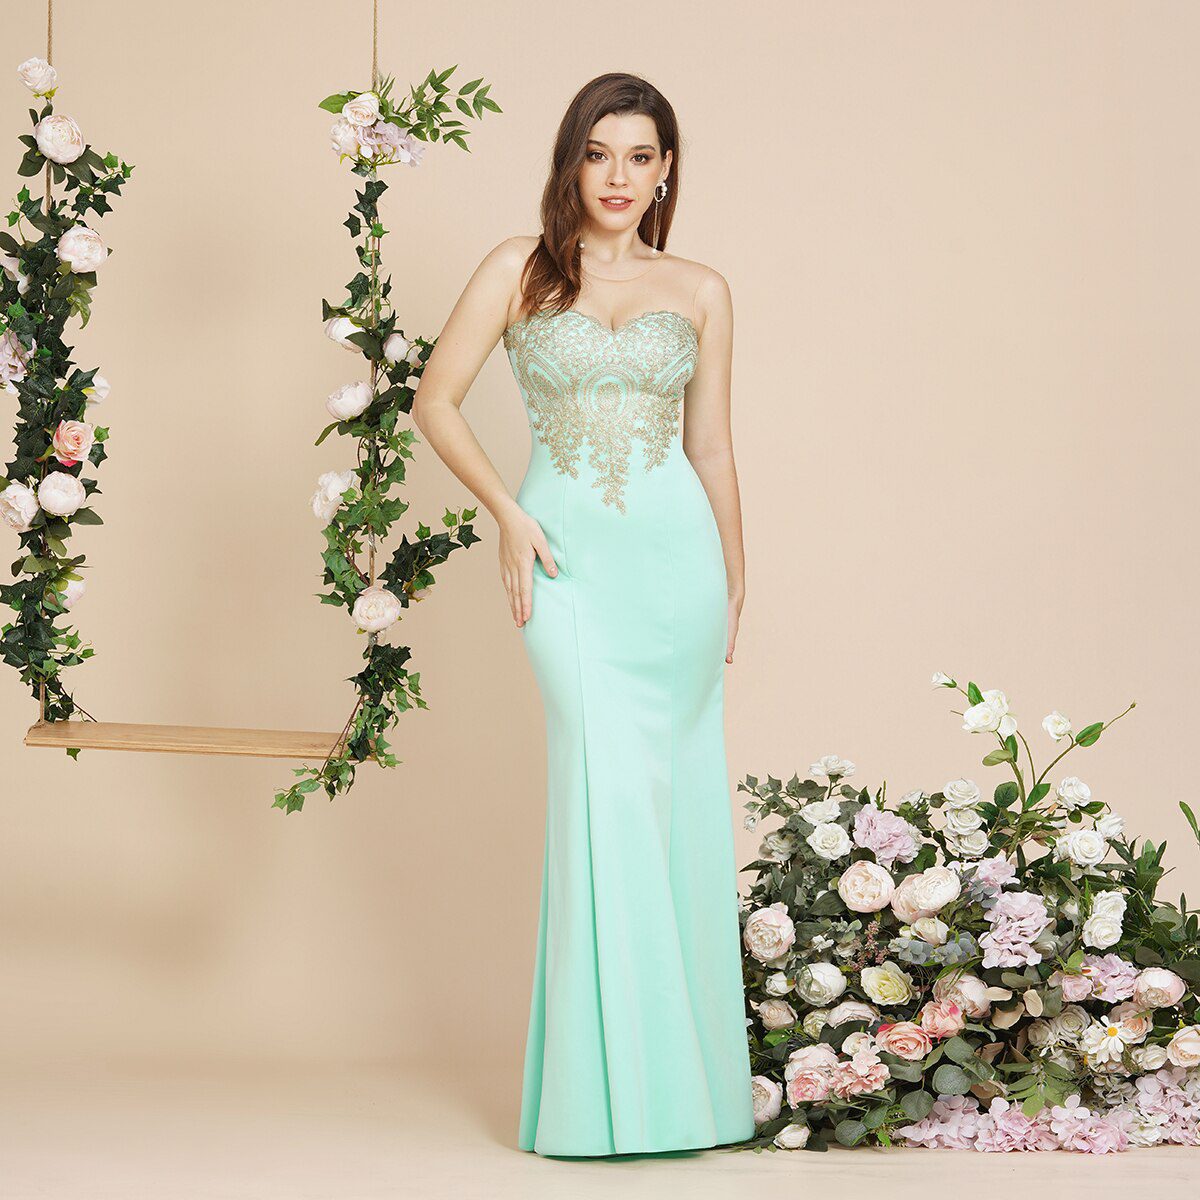 BABYONLINE Mint Green Bridesmaid Dresses Maxi Floor Length Mermaid Gowns Elegant  Golden Appqulies Sweetheart Illusion Summer